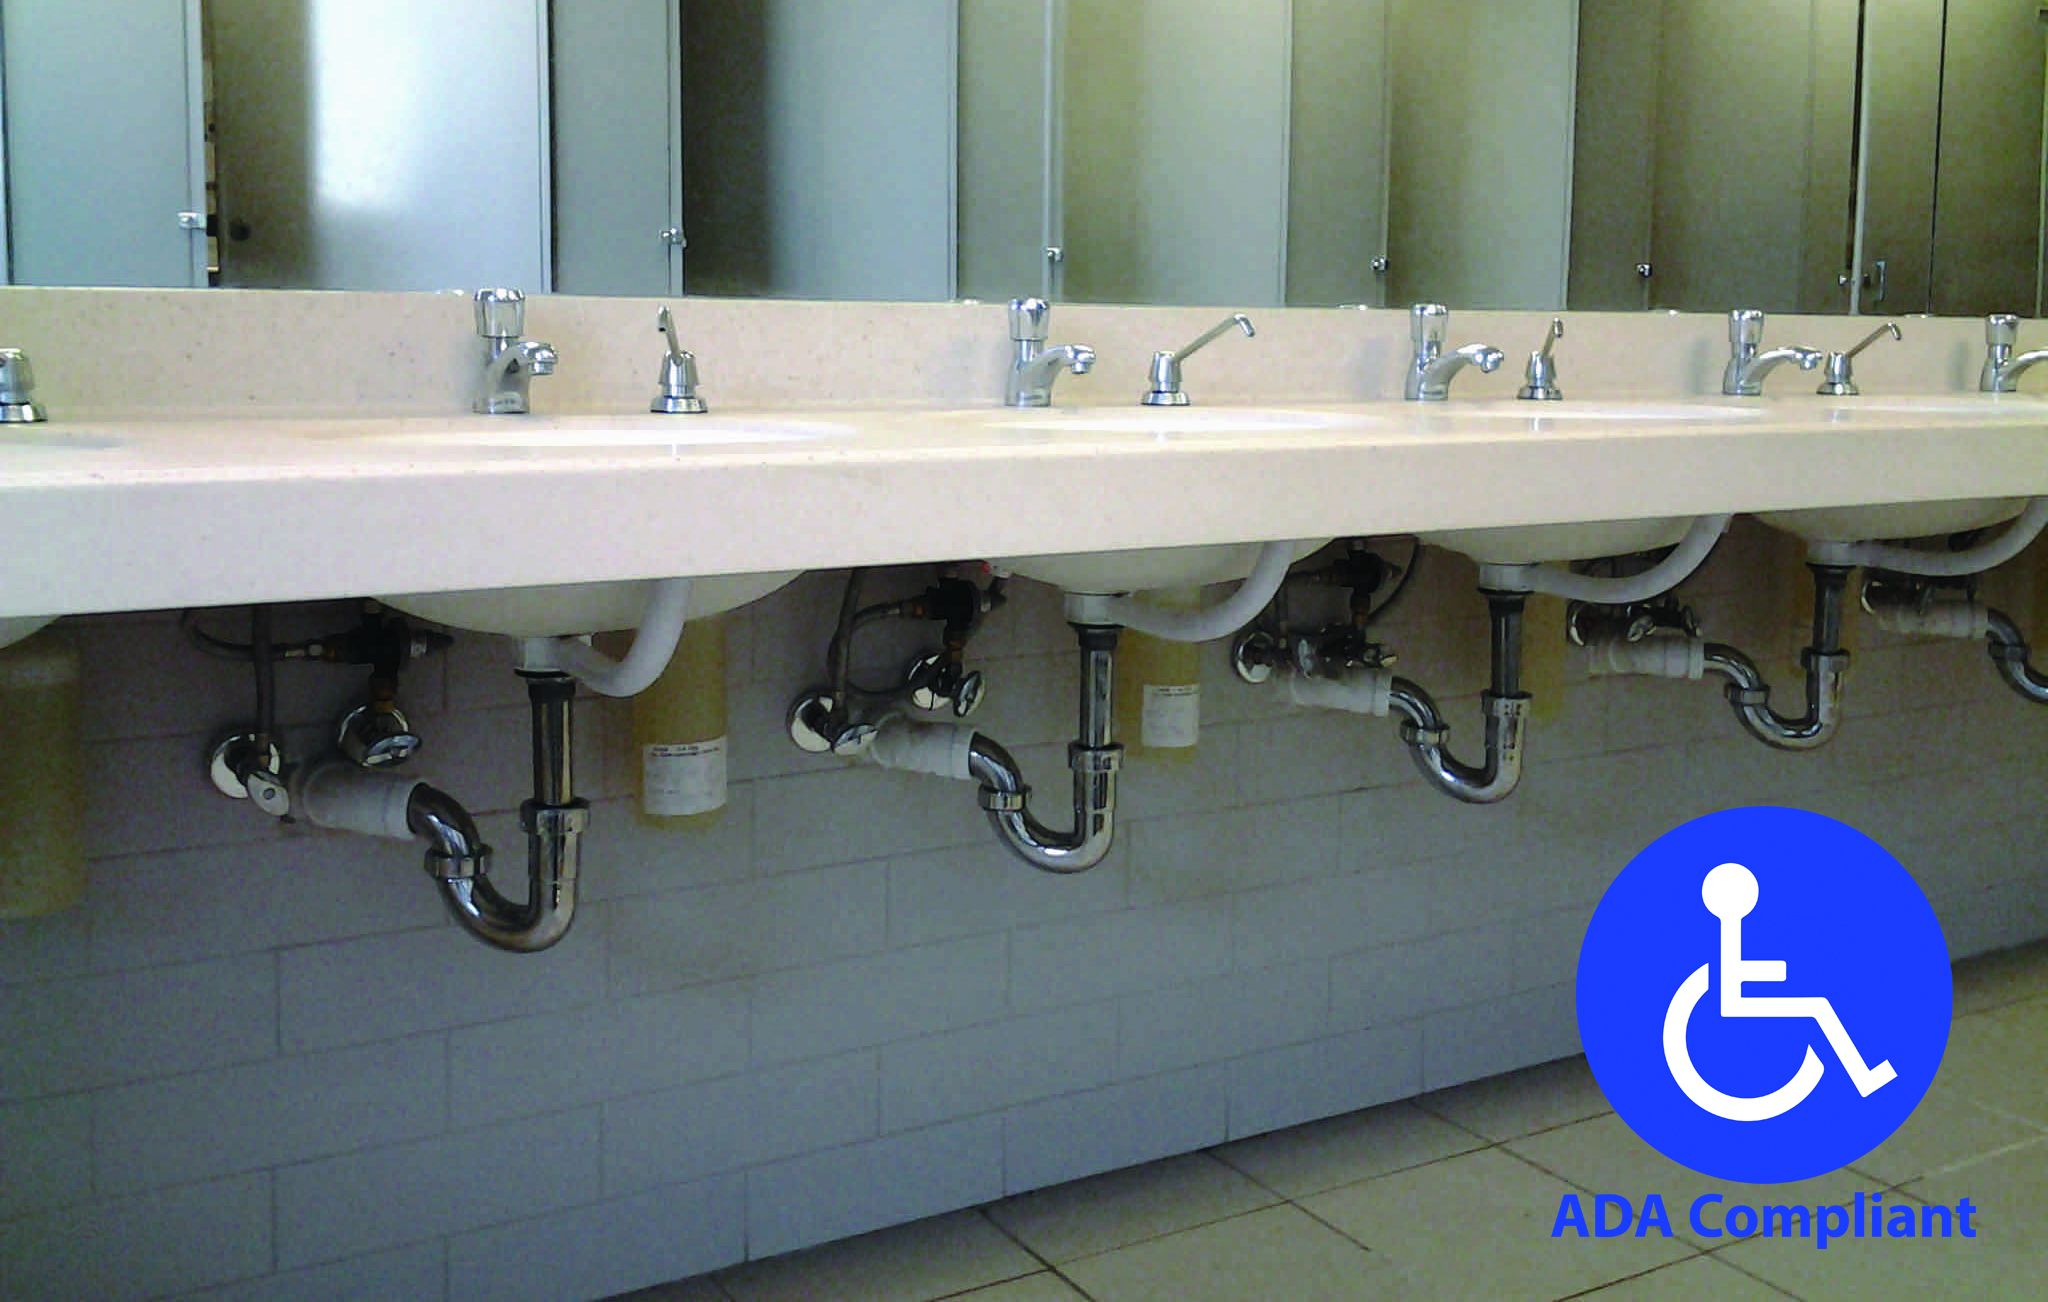 Example of an ADA Compliant restroom